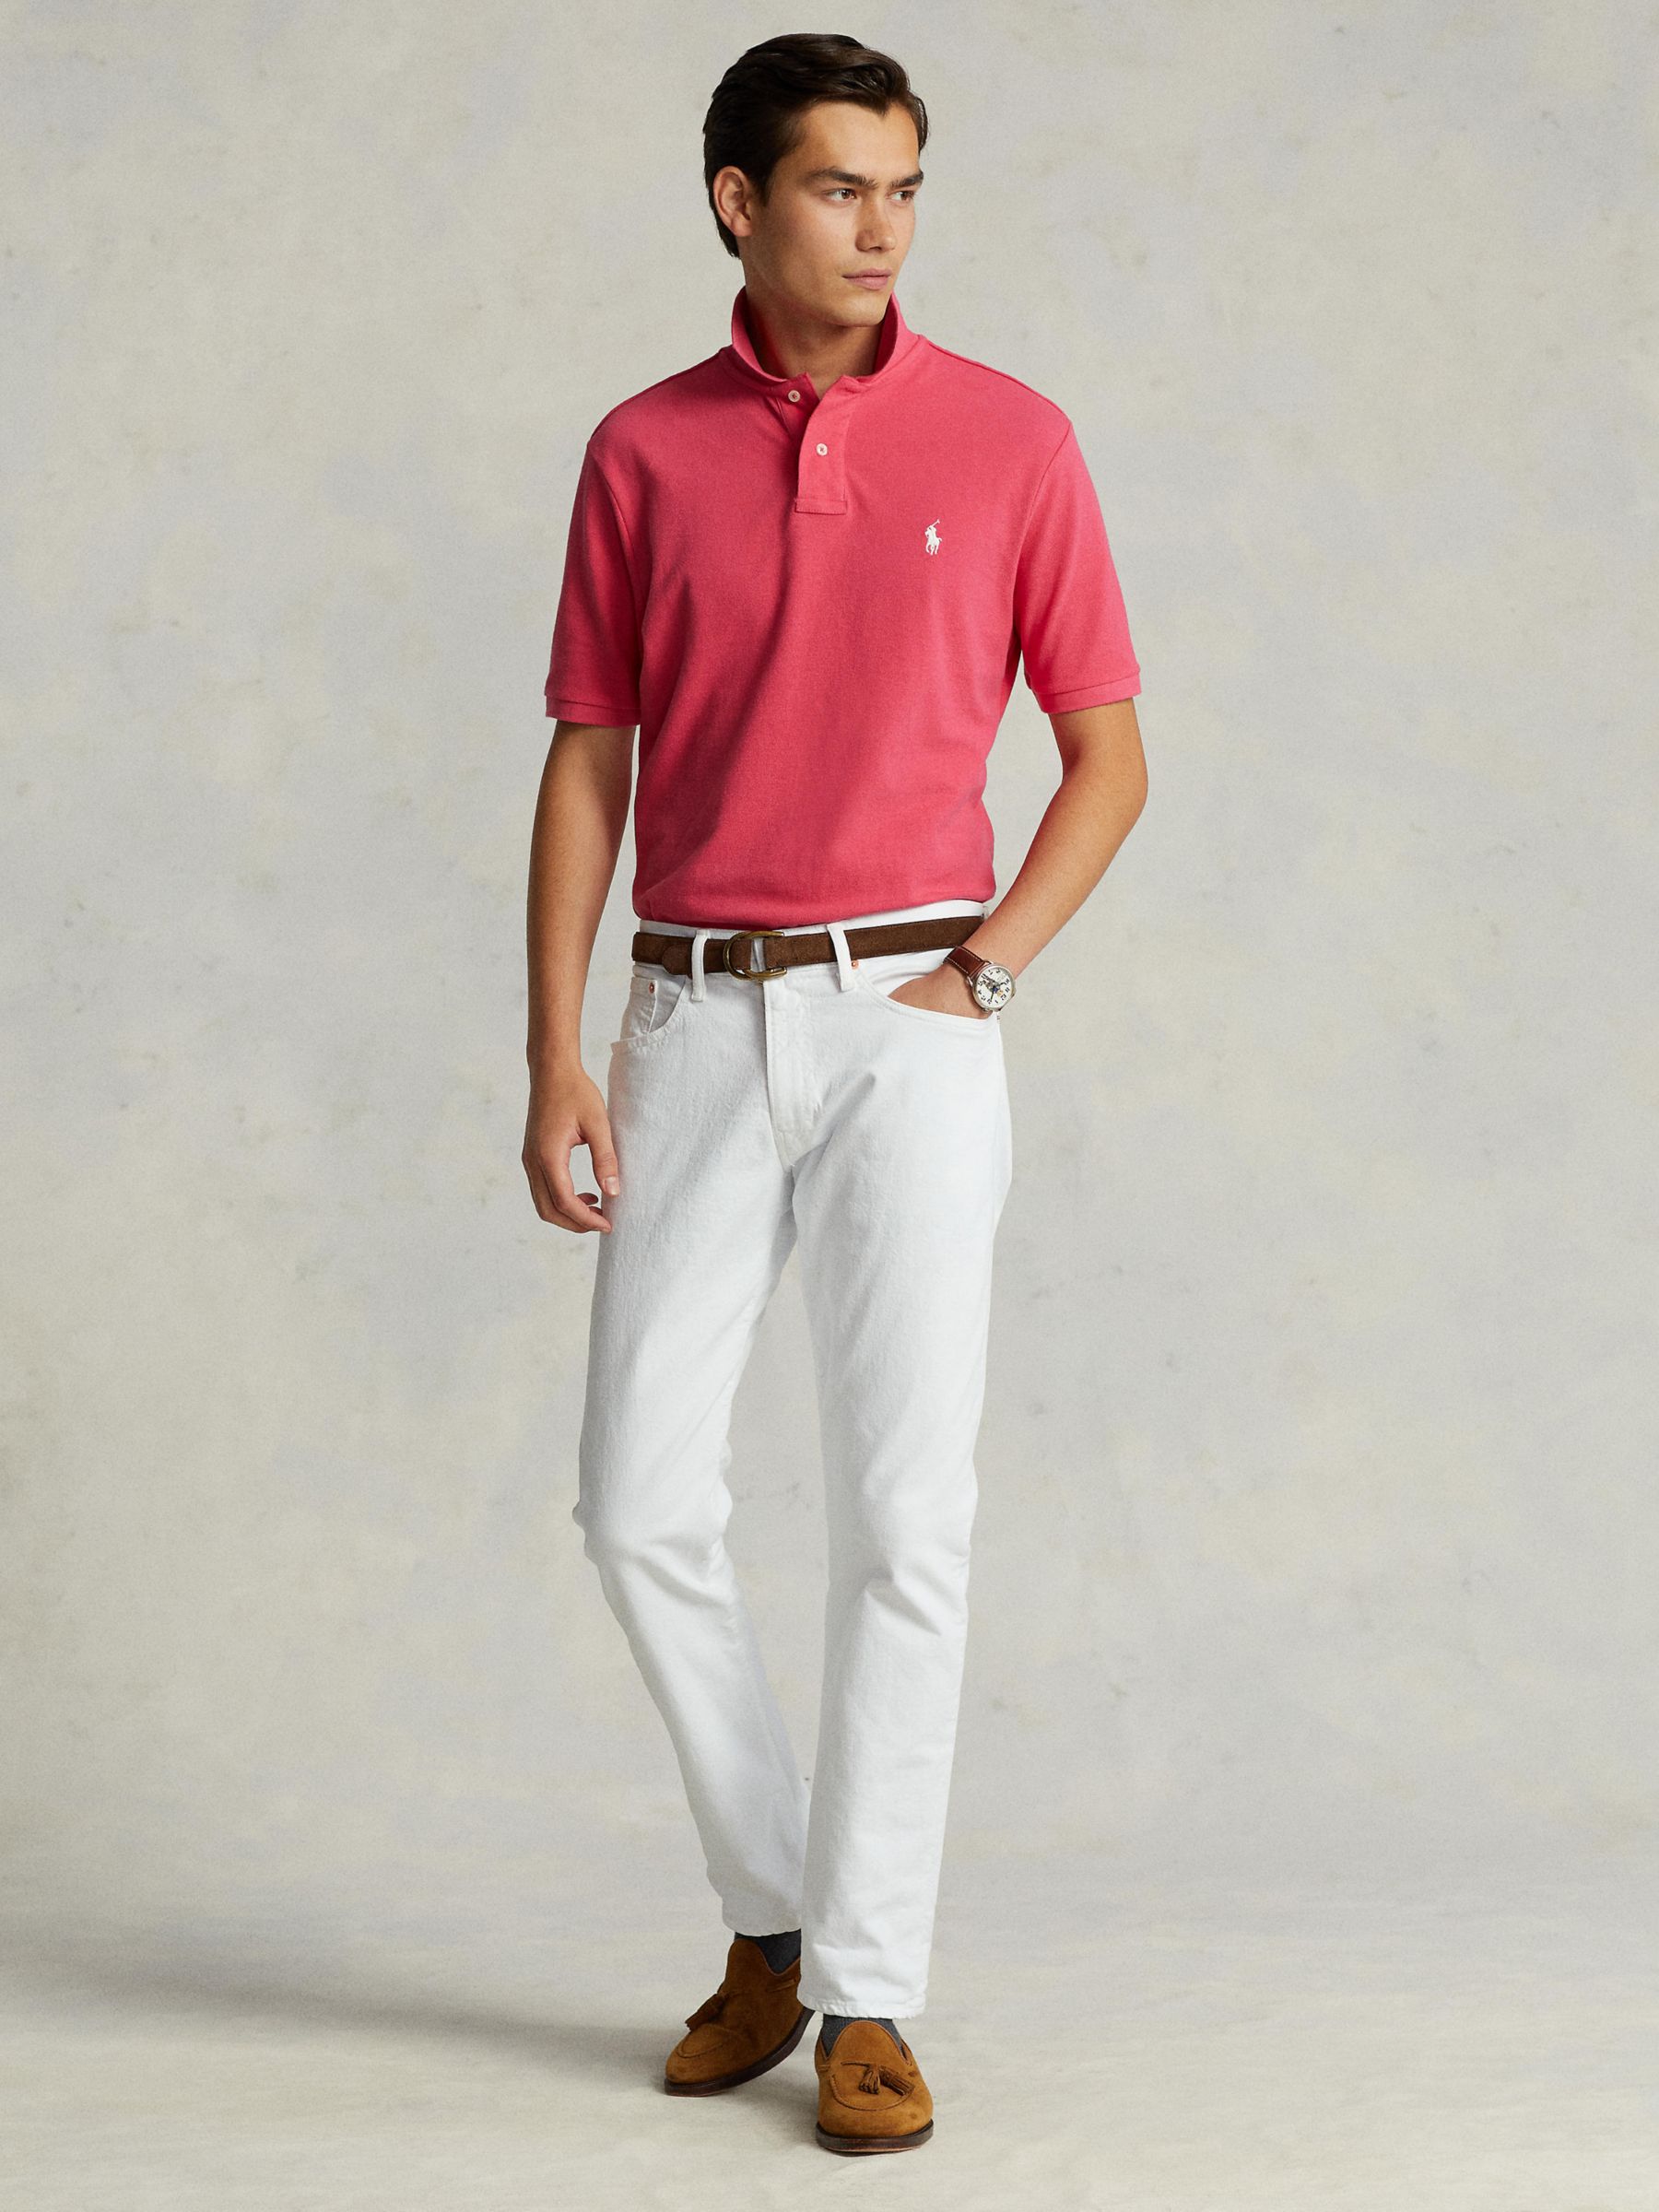 Polo Ralph Lauren Short Sleeve Custom Slim Polo Shirt, Hot Pink, S